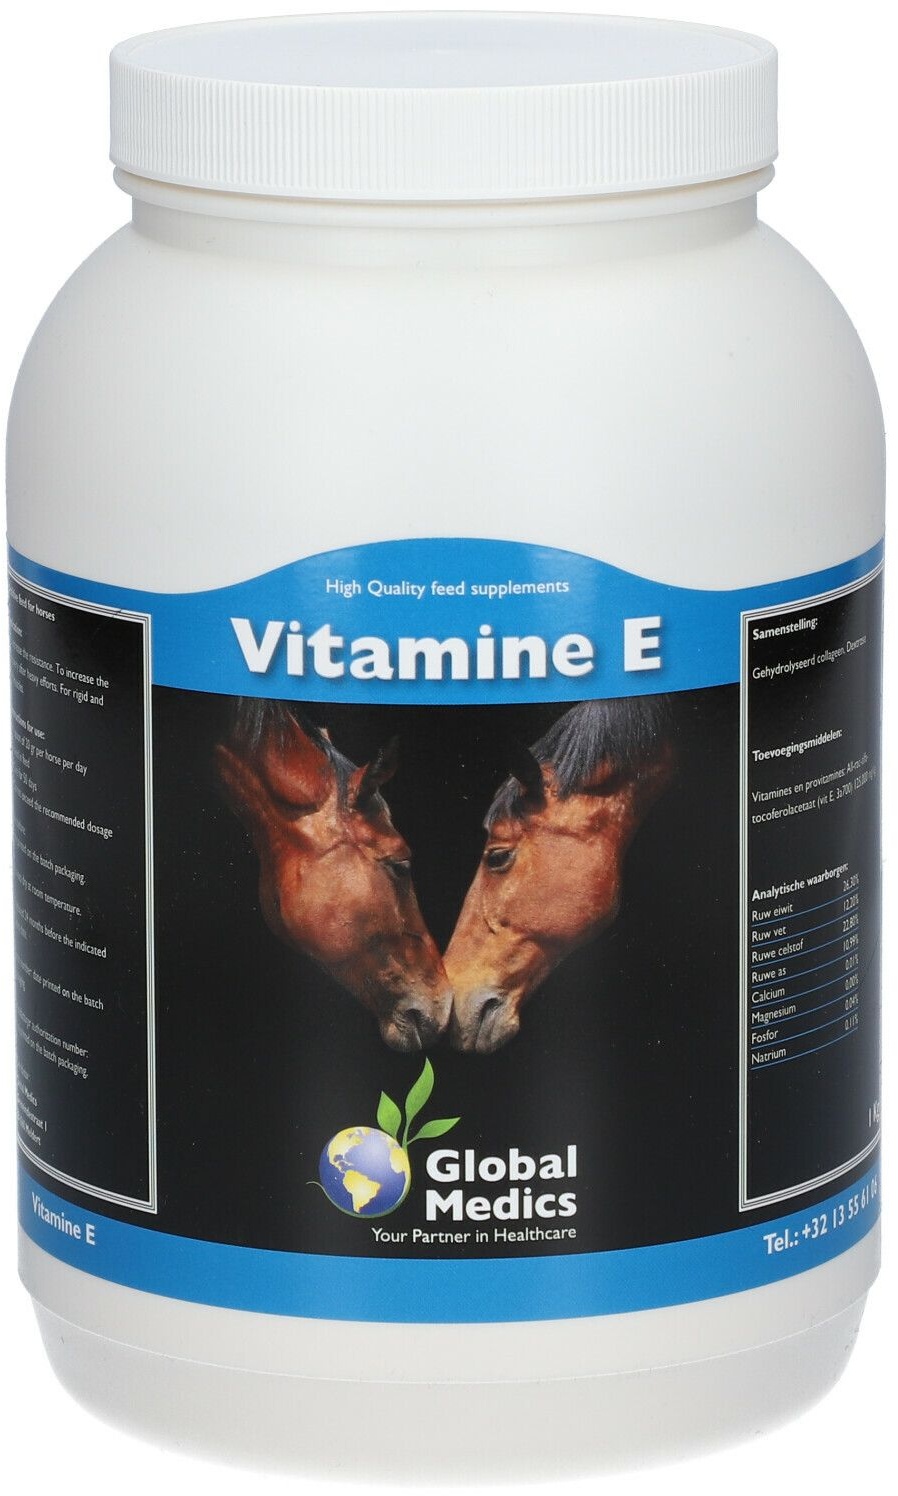 Global Medics Vitamin E